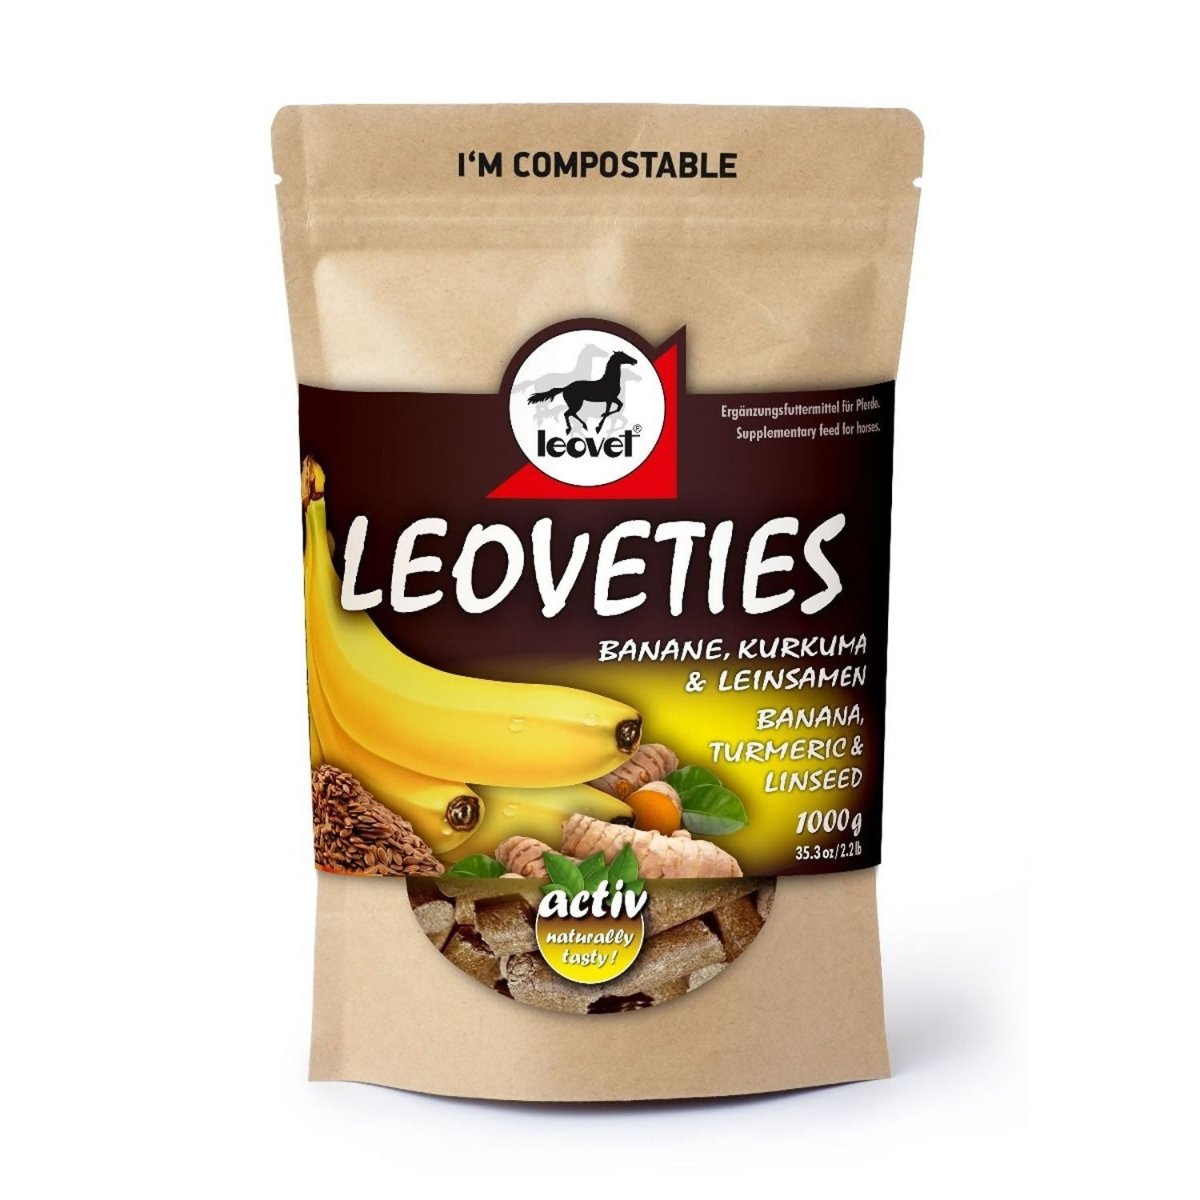 Leoveties Horse Treats - Banana, Turmeric & Linseed - 1Kg